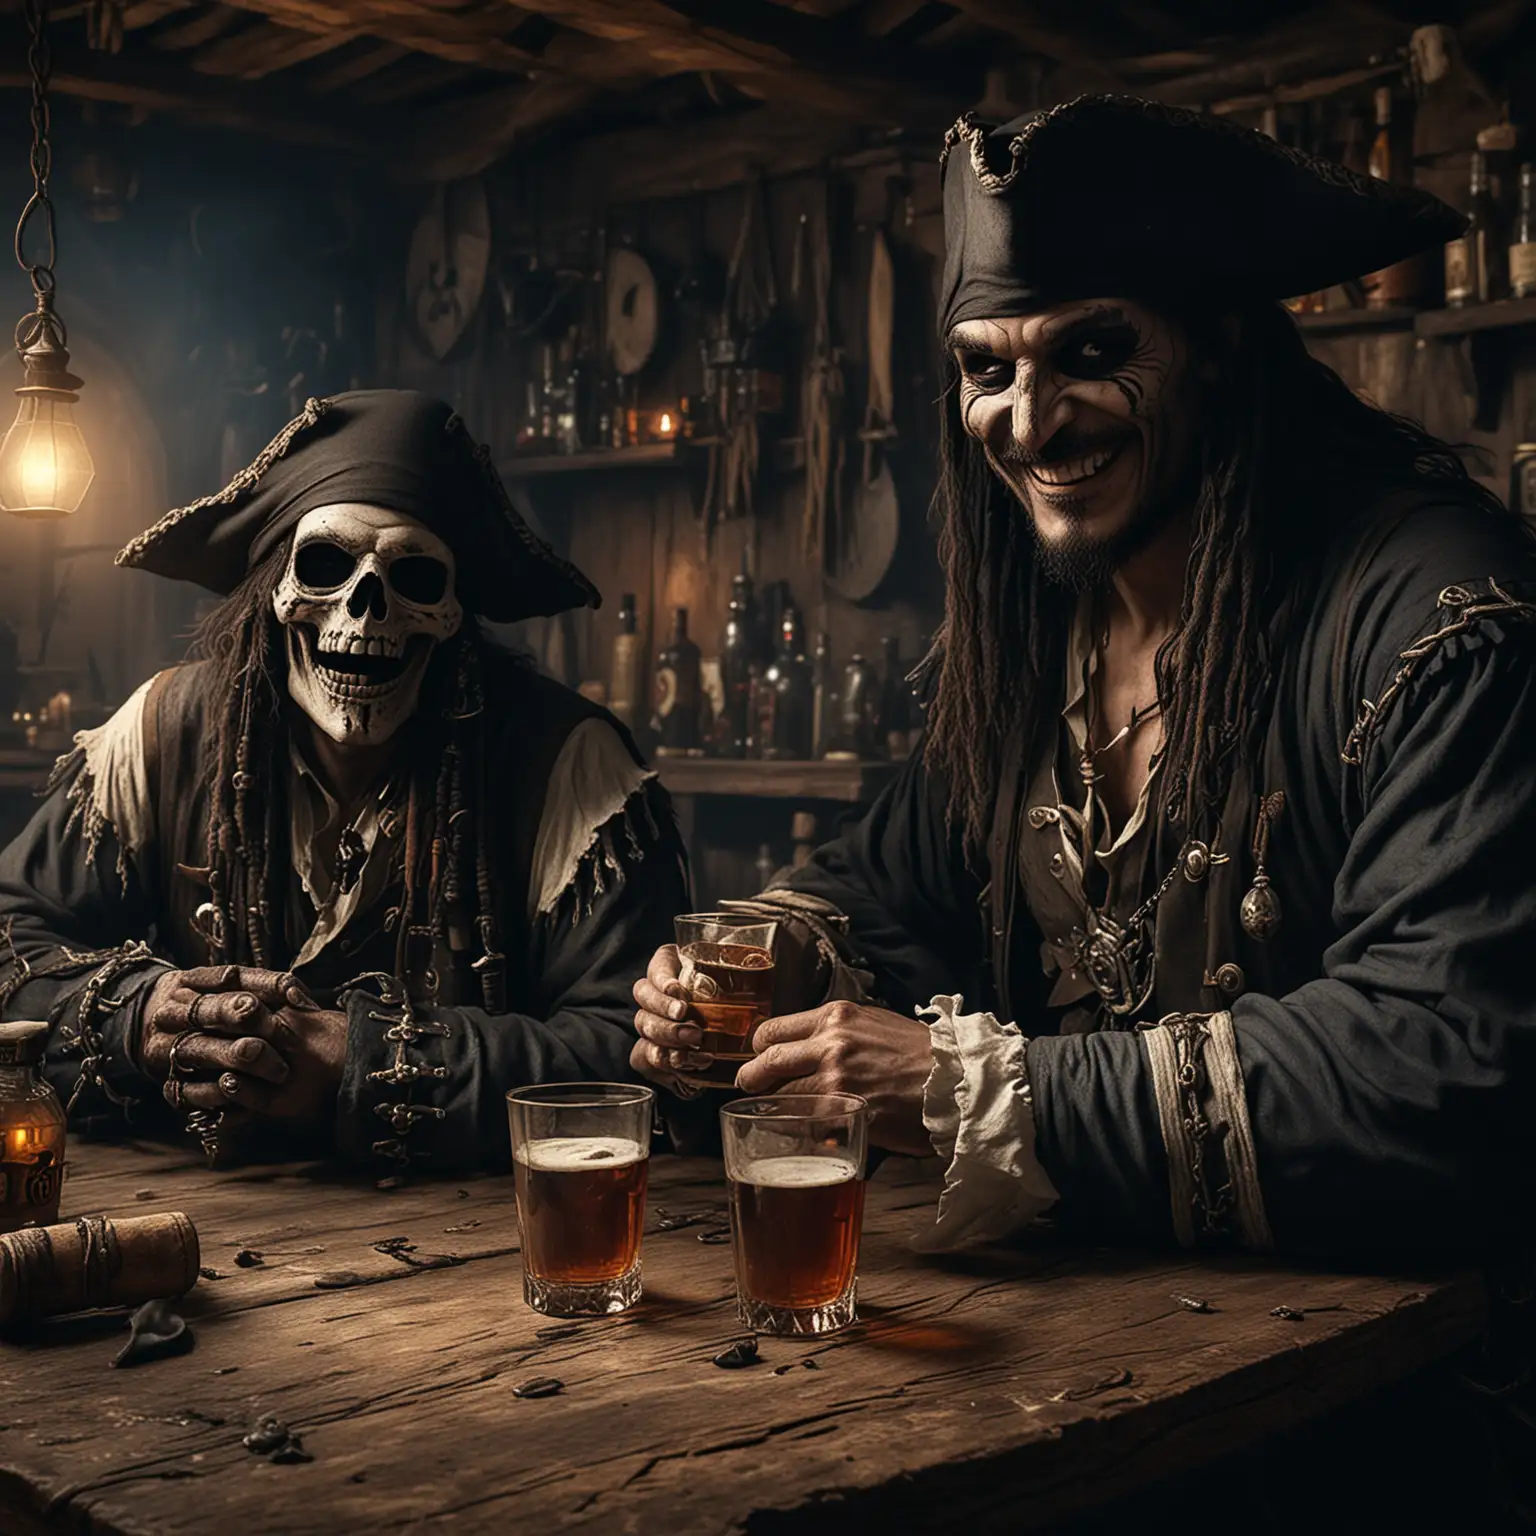 Pirate and Grim Reaper Enjoying Rum in Dimly Lit Medieval Tavern